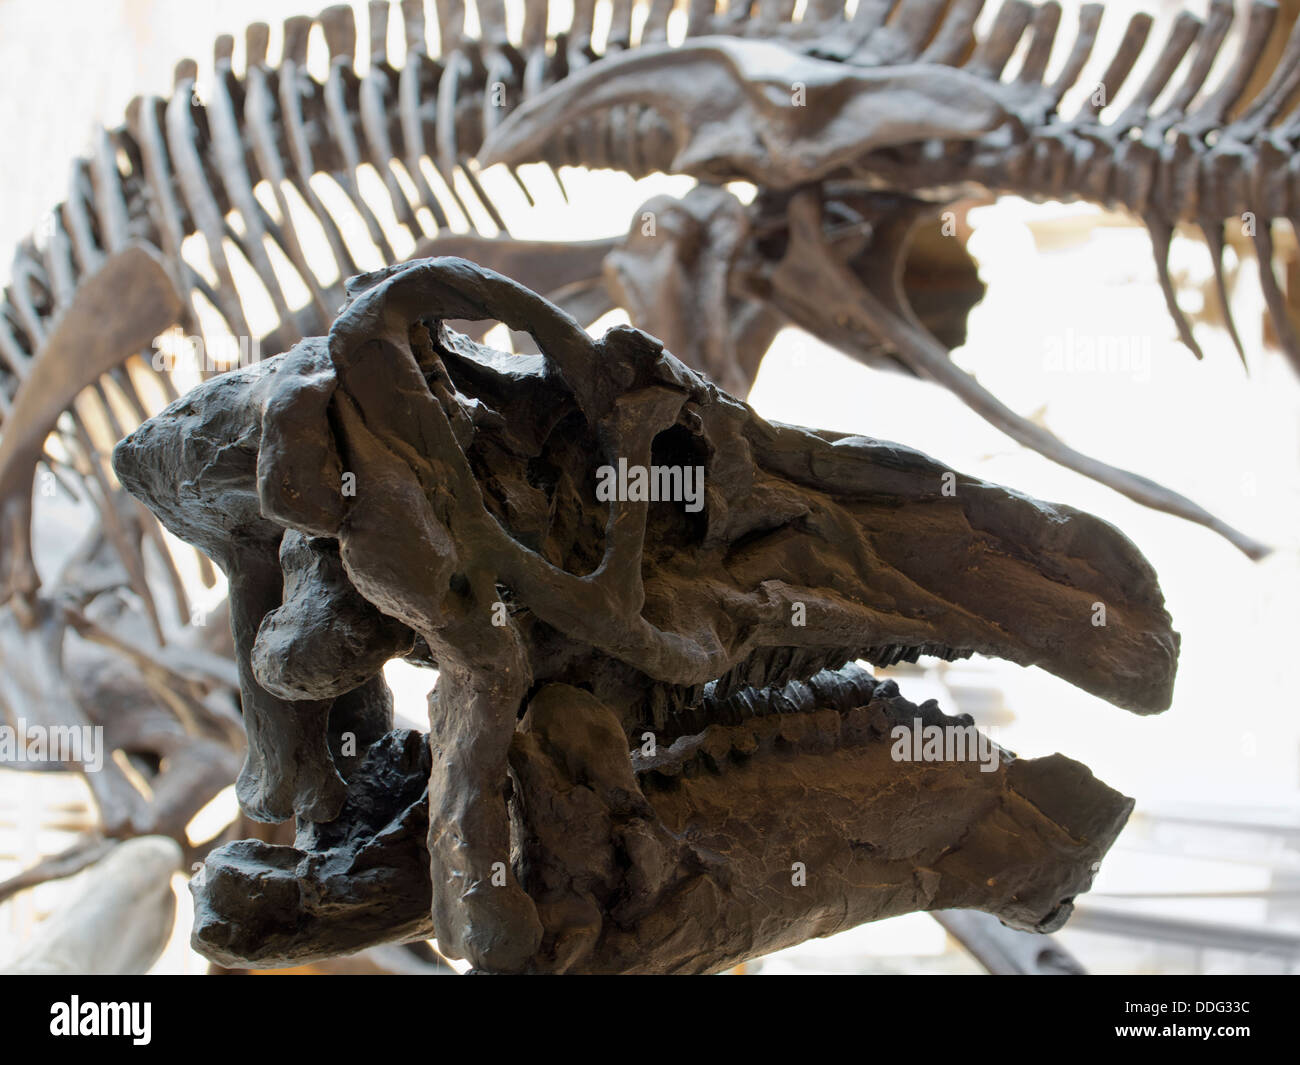 Dinosaur bones at the Pitt Rivers Natural History Museum, Oxford 1 Stock Photo